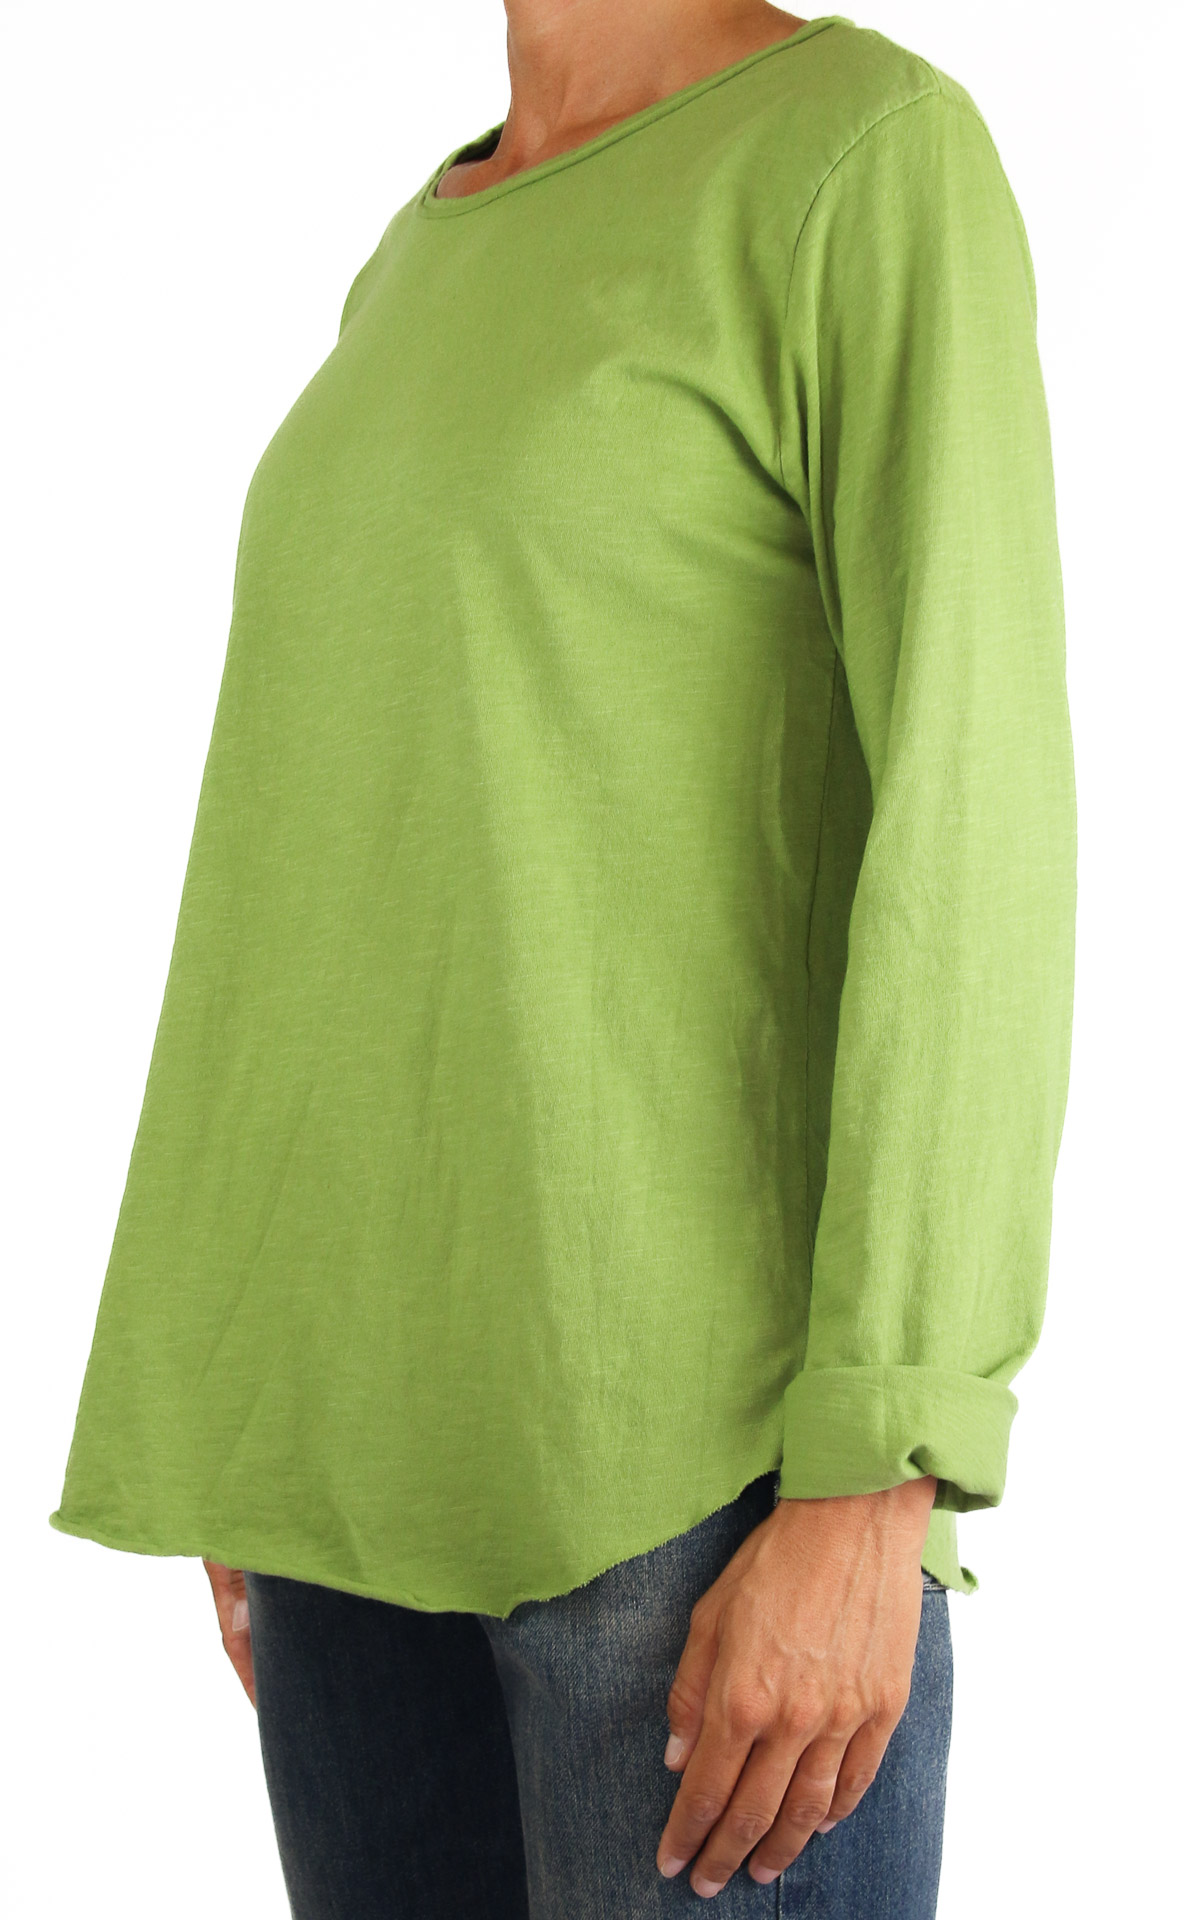 Initial - t-shirt cotone girocollo - verde